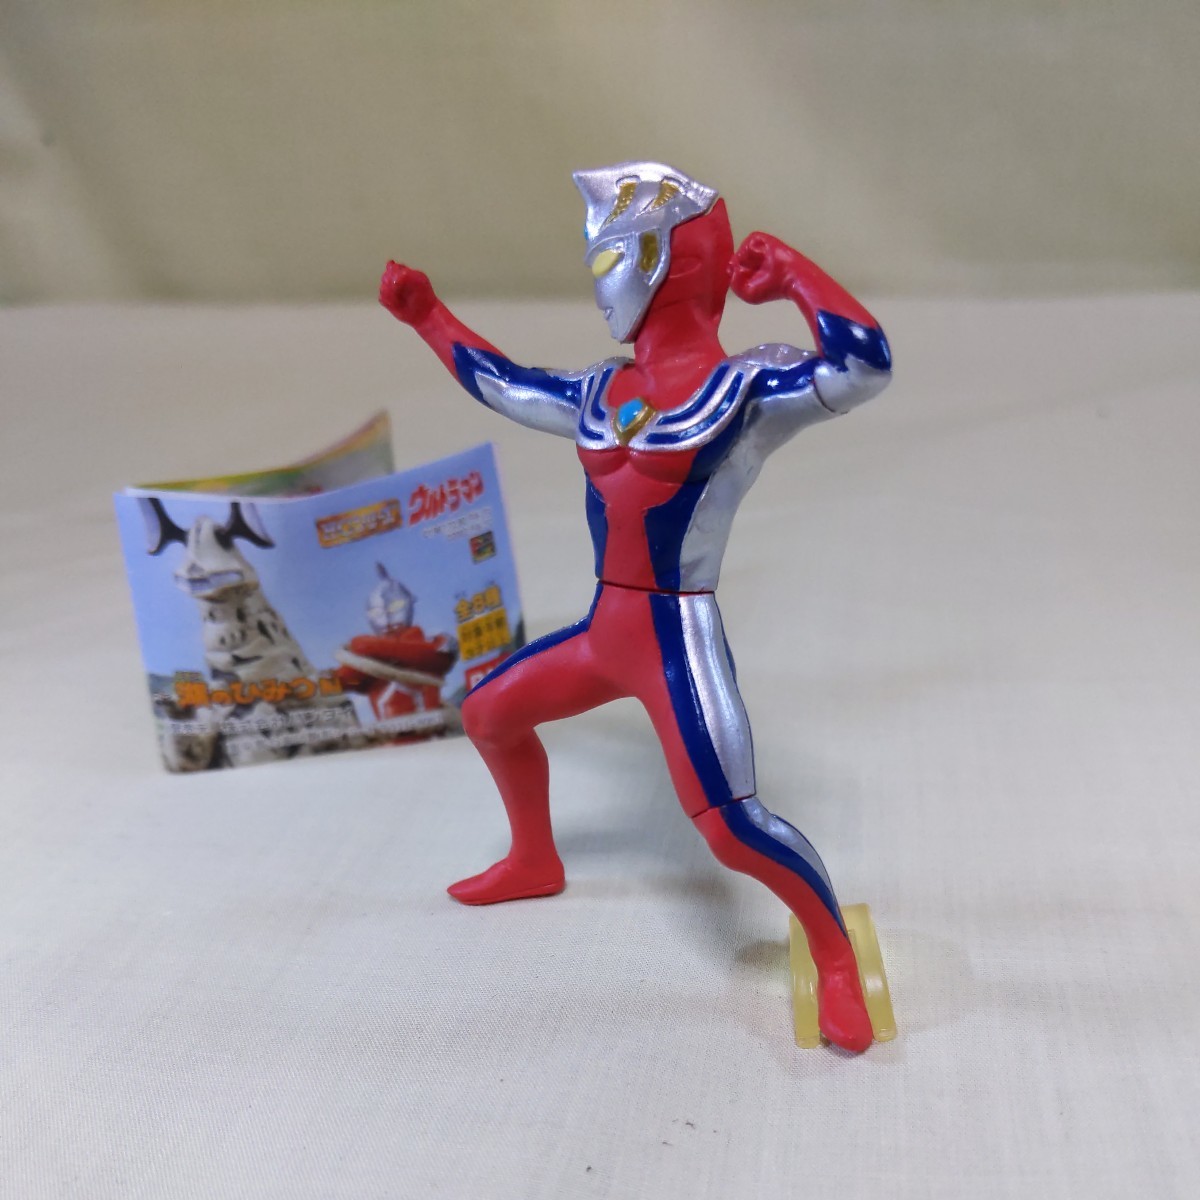  Ultraman 80 Justy s Capsule gashapon Gacha Gacha фигурка подлинная вещь HG серии озеро. секрет сборник иен . Pro / Bandai 